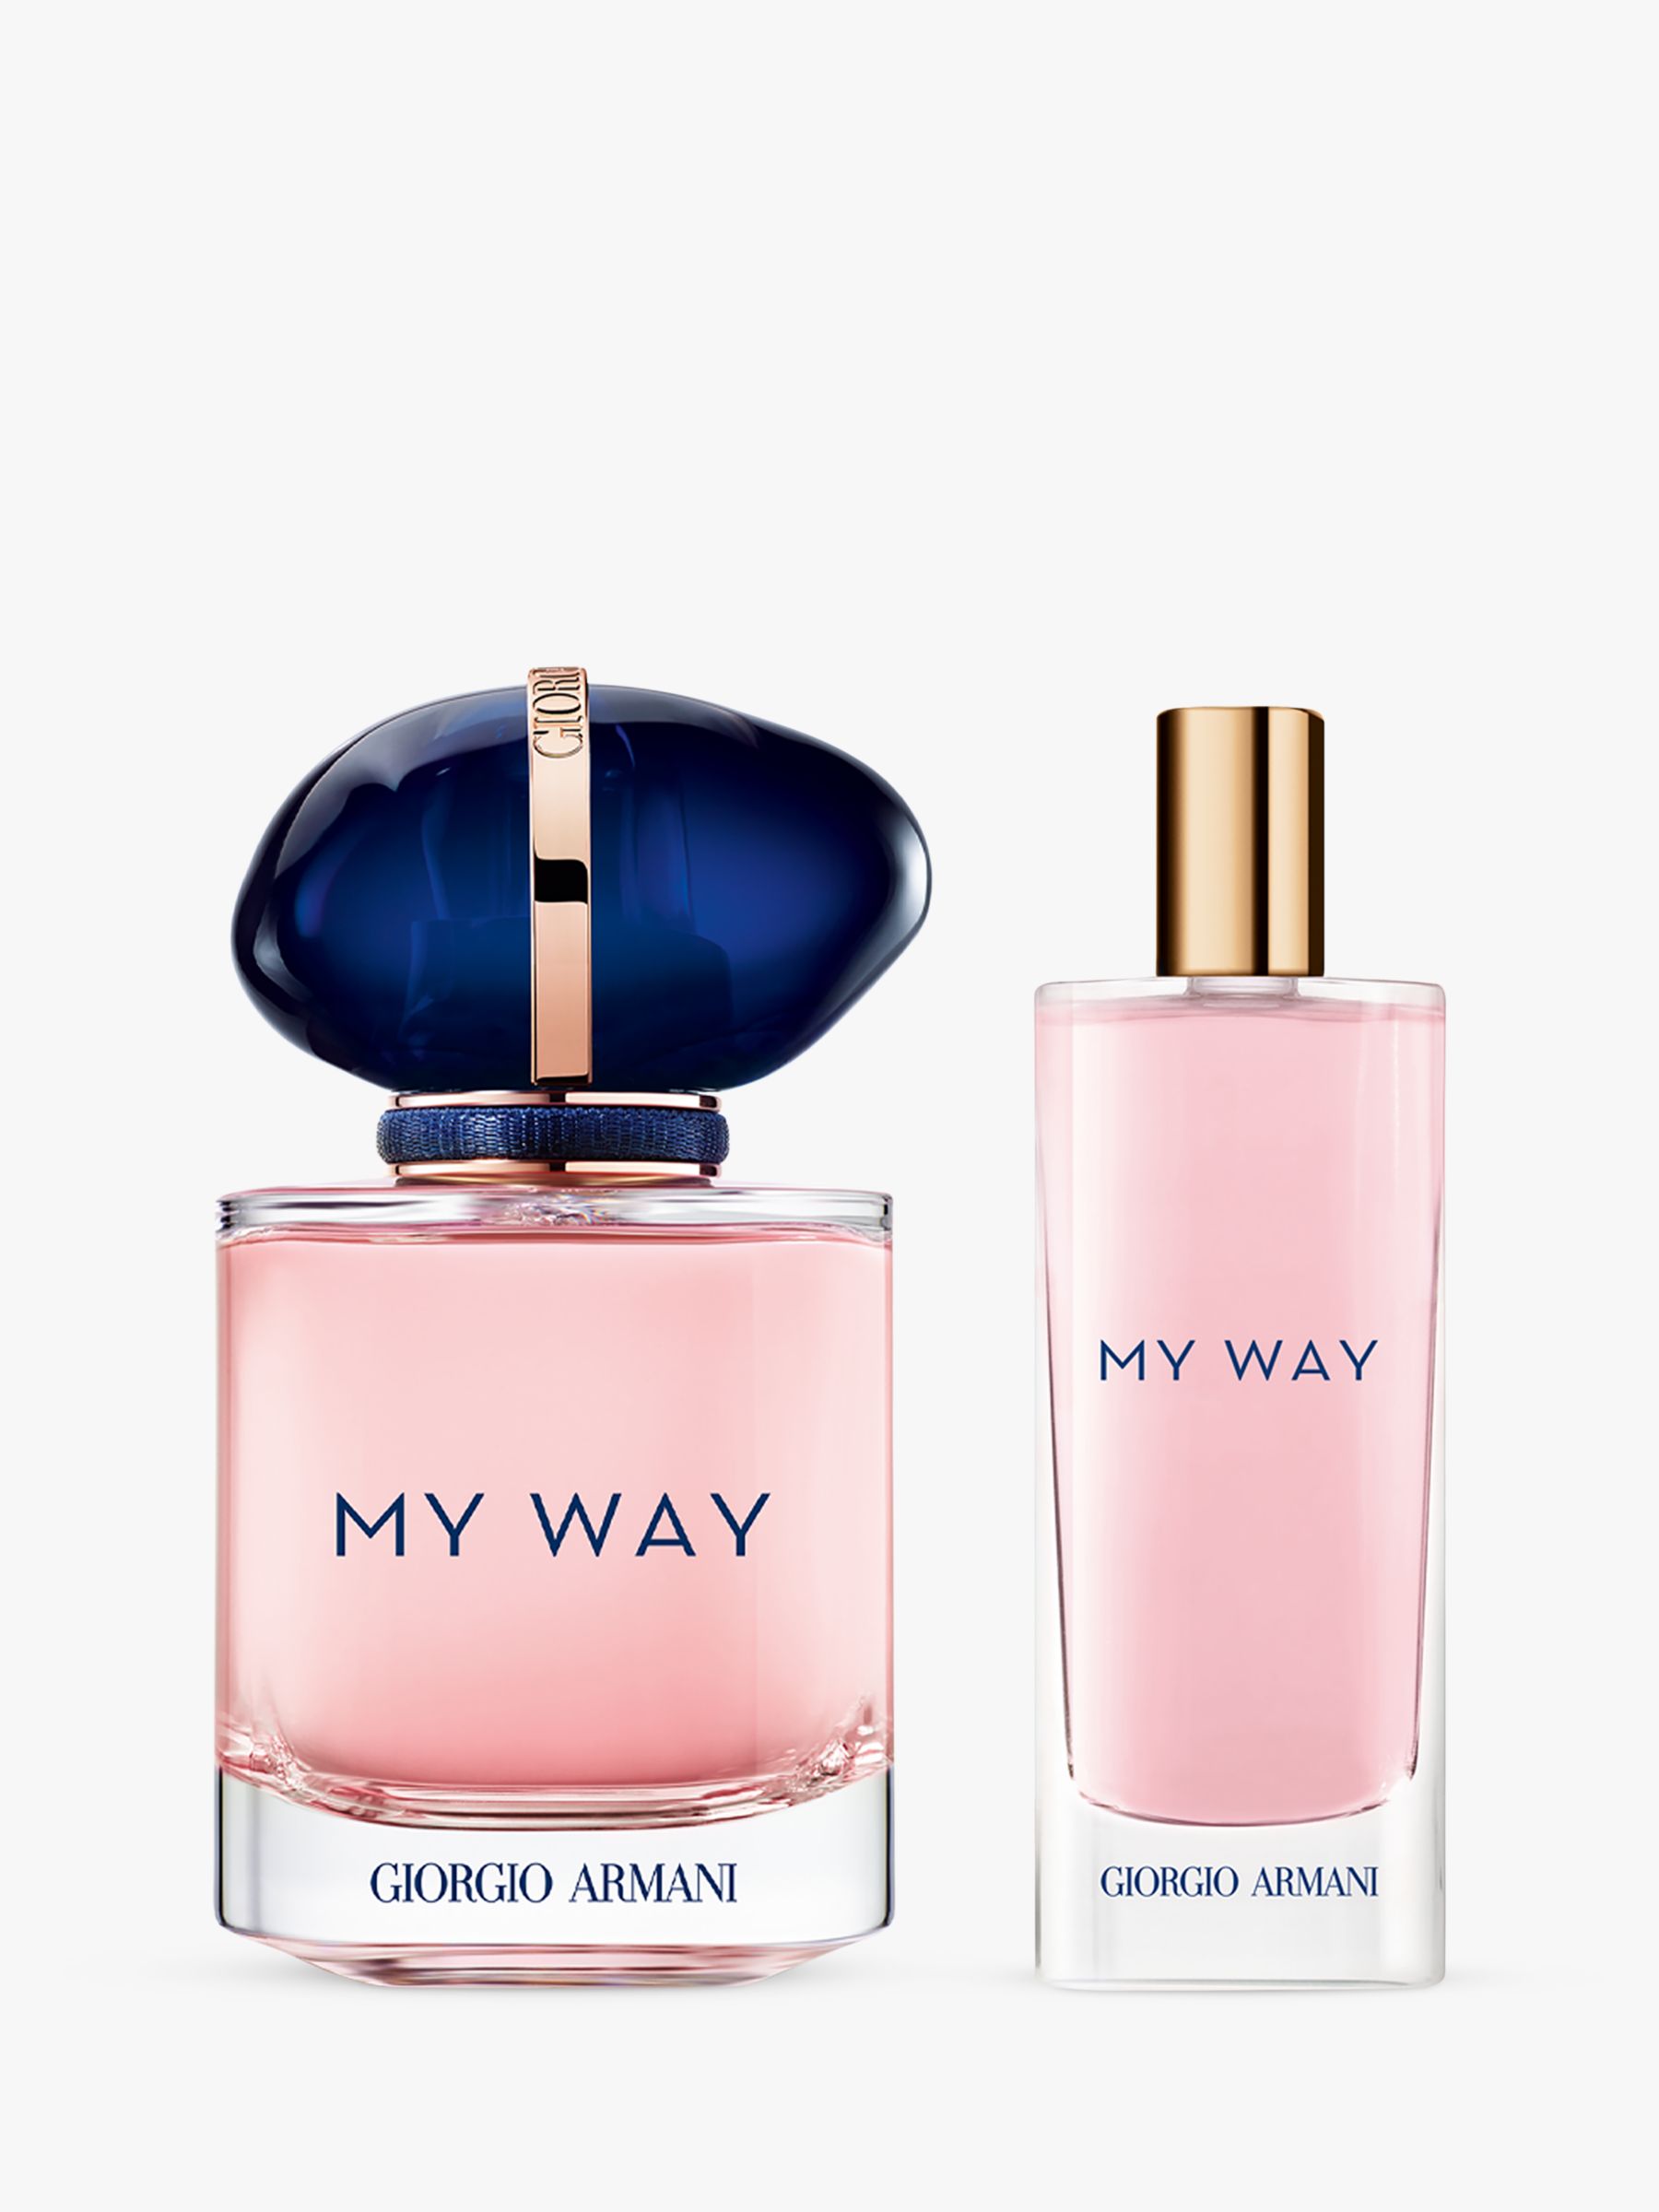 Giorgio Armani My Way Eau de Parfum, 50ml Fragrance Gift Set